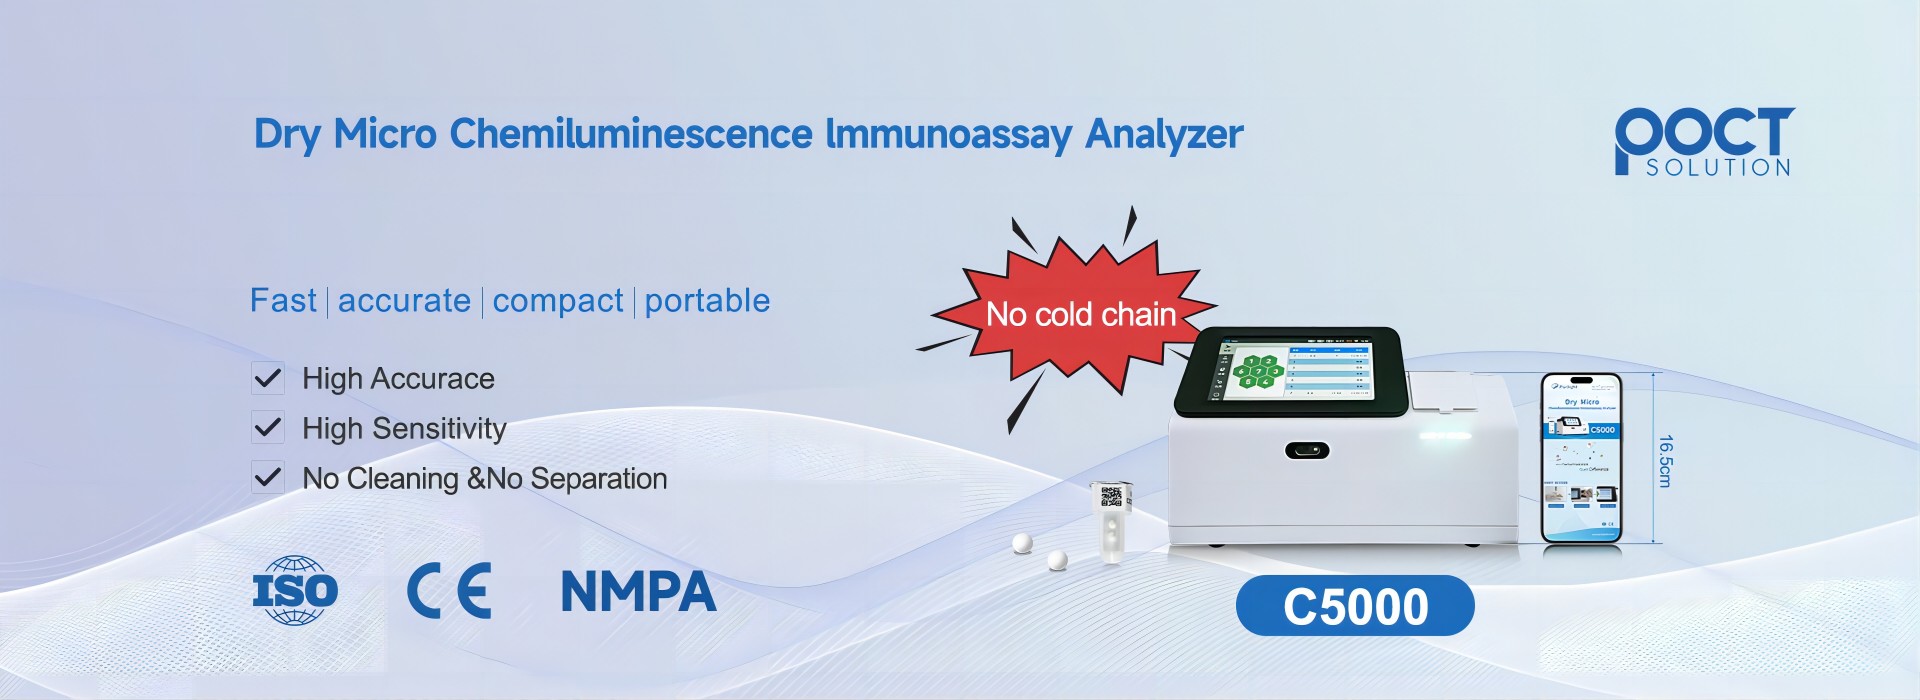 À quoi sert l’analyseur d’immunoanalyse par chimiluminescence ?
        